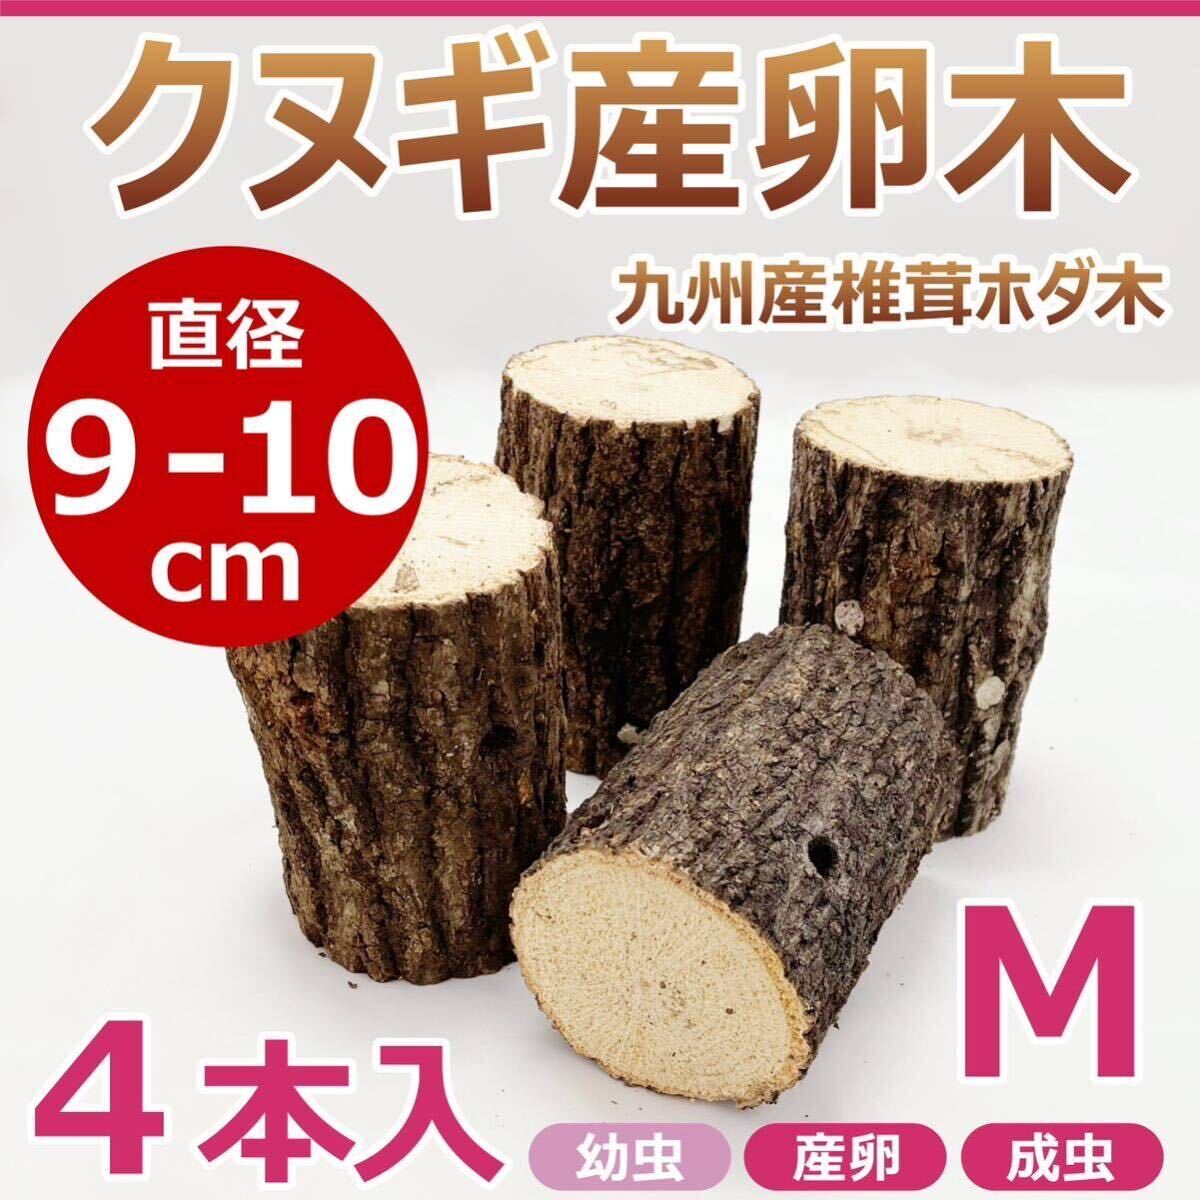 [RK] дуб острейший производство яйцо дерево 4 шт. входит диаметр примерно 9~10.M размер Kyushu производство .. ho da дерево рогач производство яйцо дерево оптимальный!! жук-носорог * рогач M50